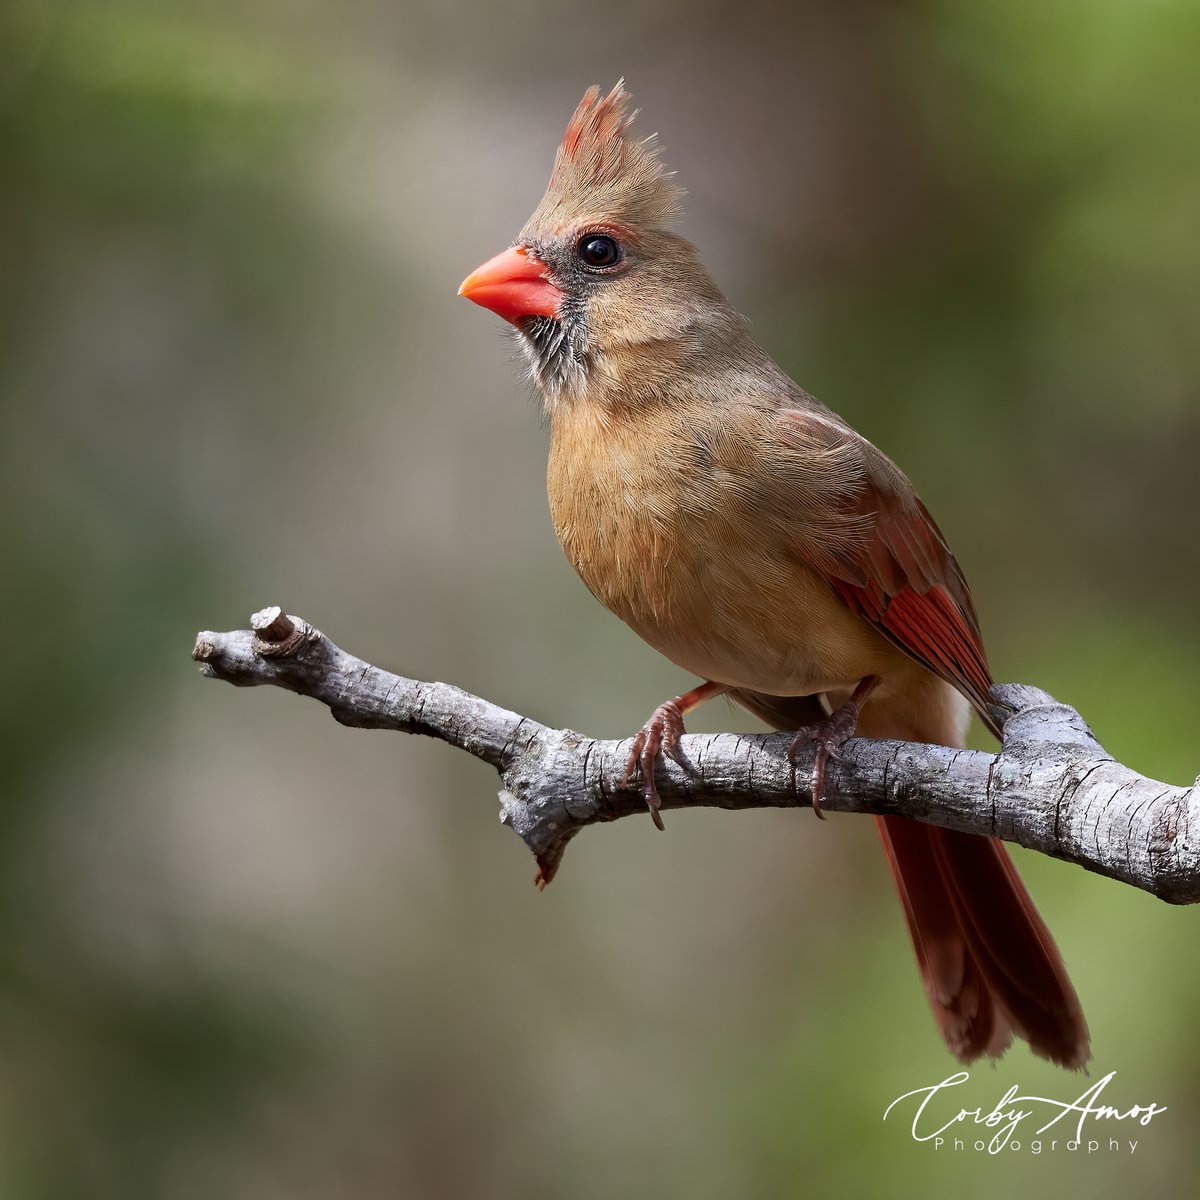 Female Northern Cardinal
.
.
#birdphotography #birdwatching #birding #BirdTwitter #twitterbirds #birdpics #northerncardinal